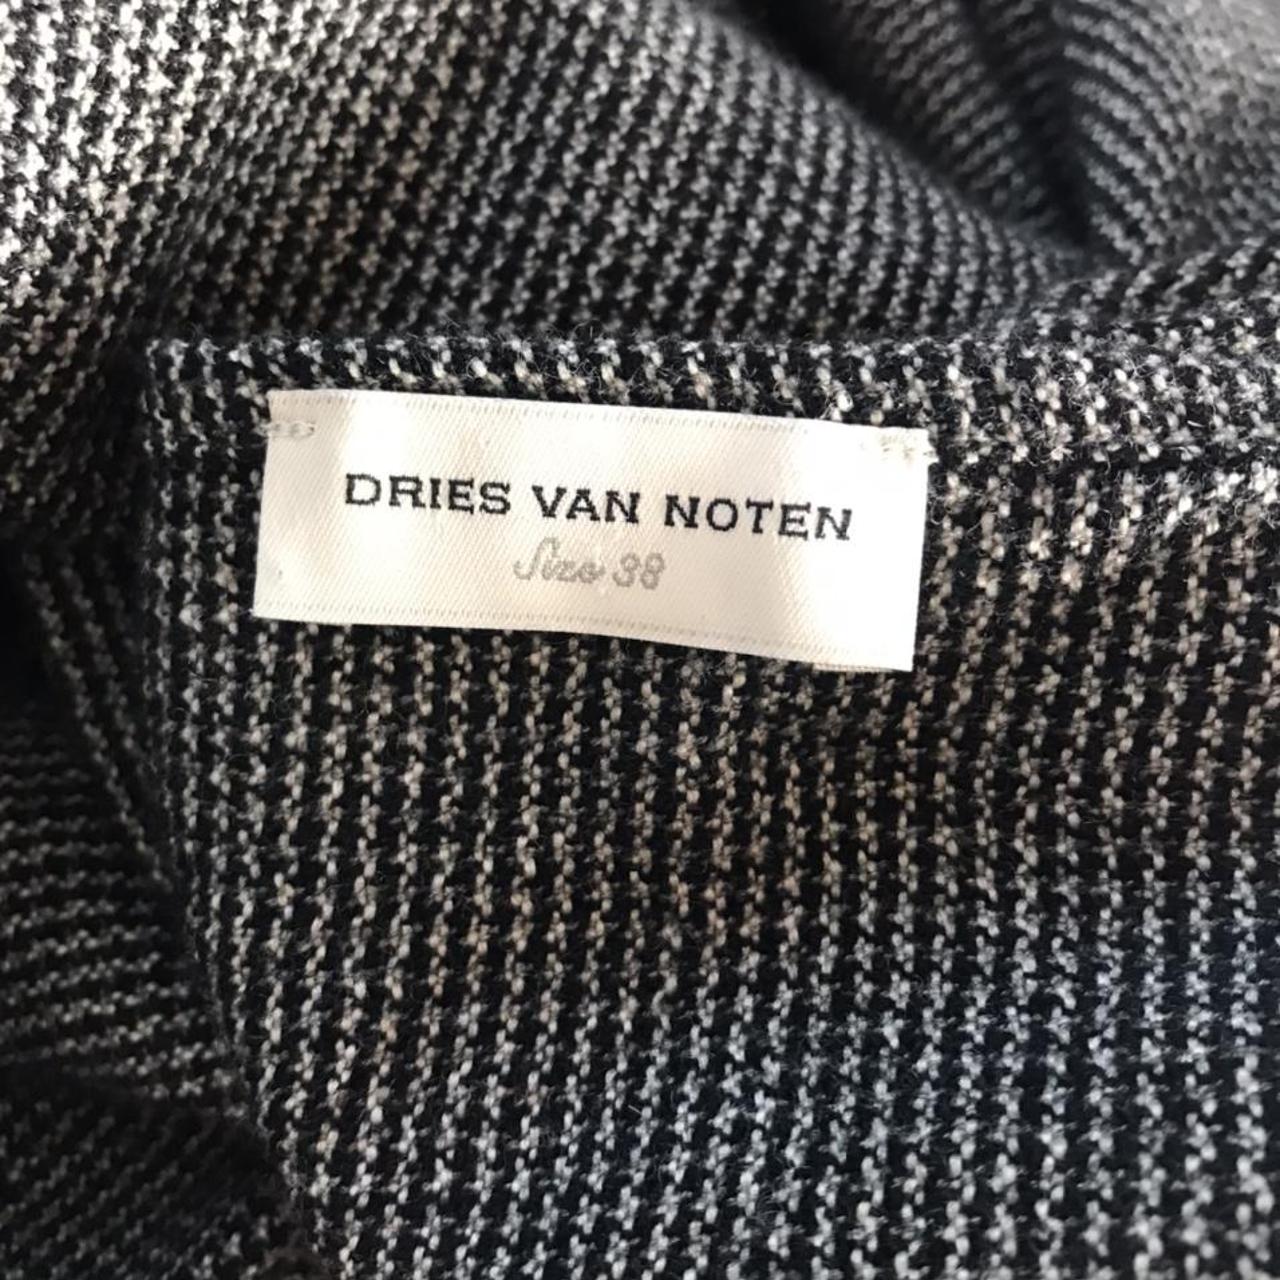 Product Image 4 - Preloved Dries Van Noten Dress
.
Custom-embellished